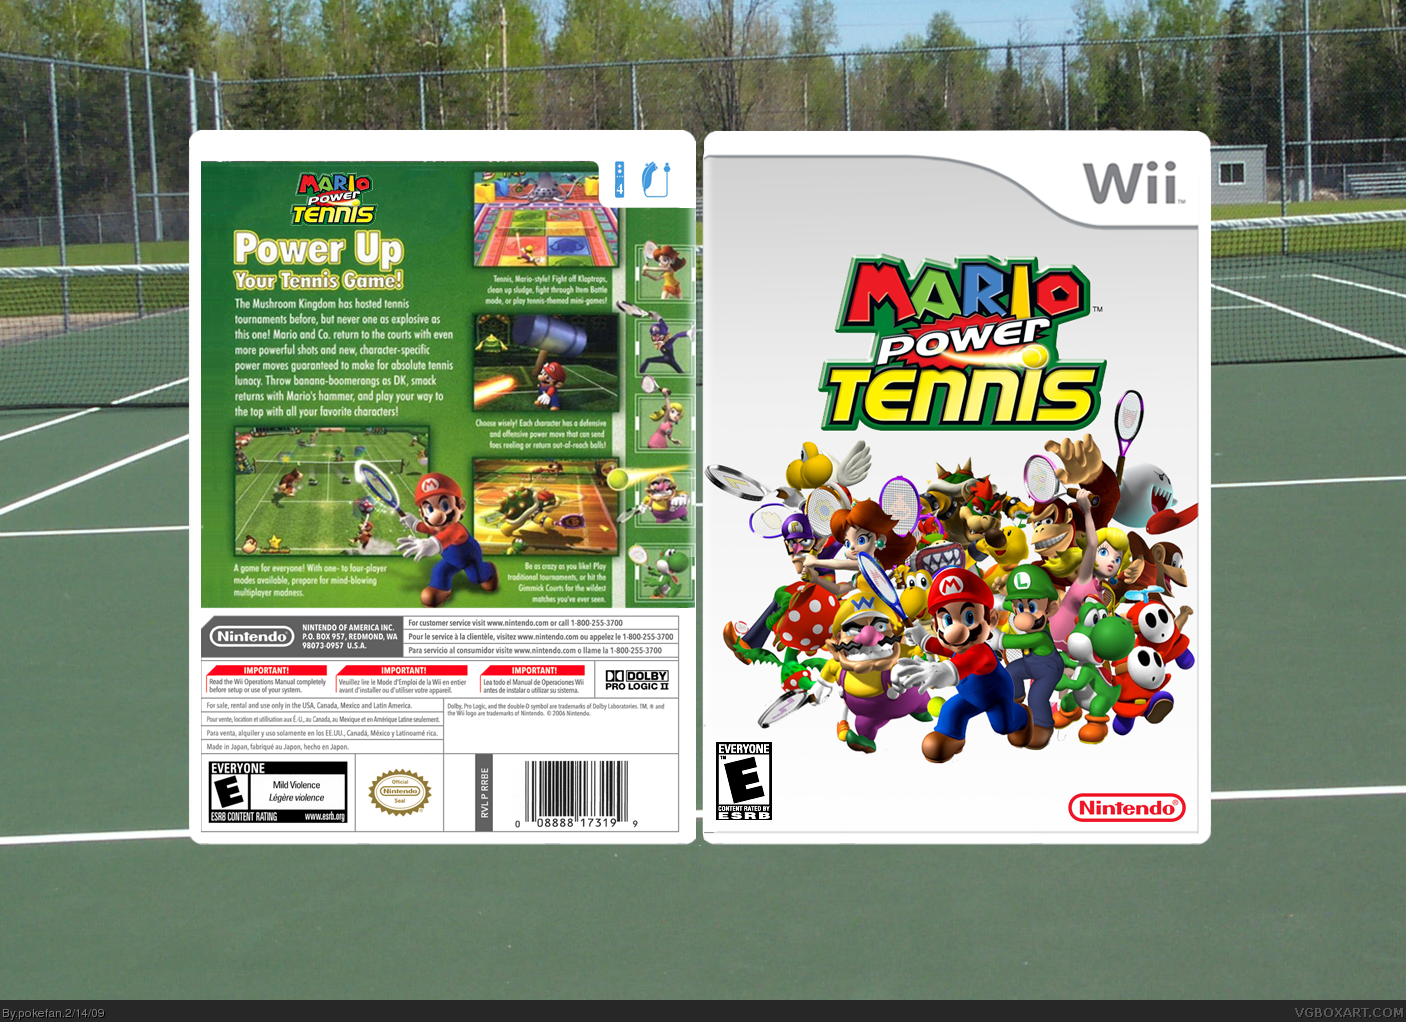 Mario Power Tennis Wii Box Art Cover by pokefan